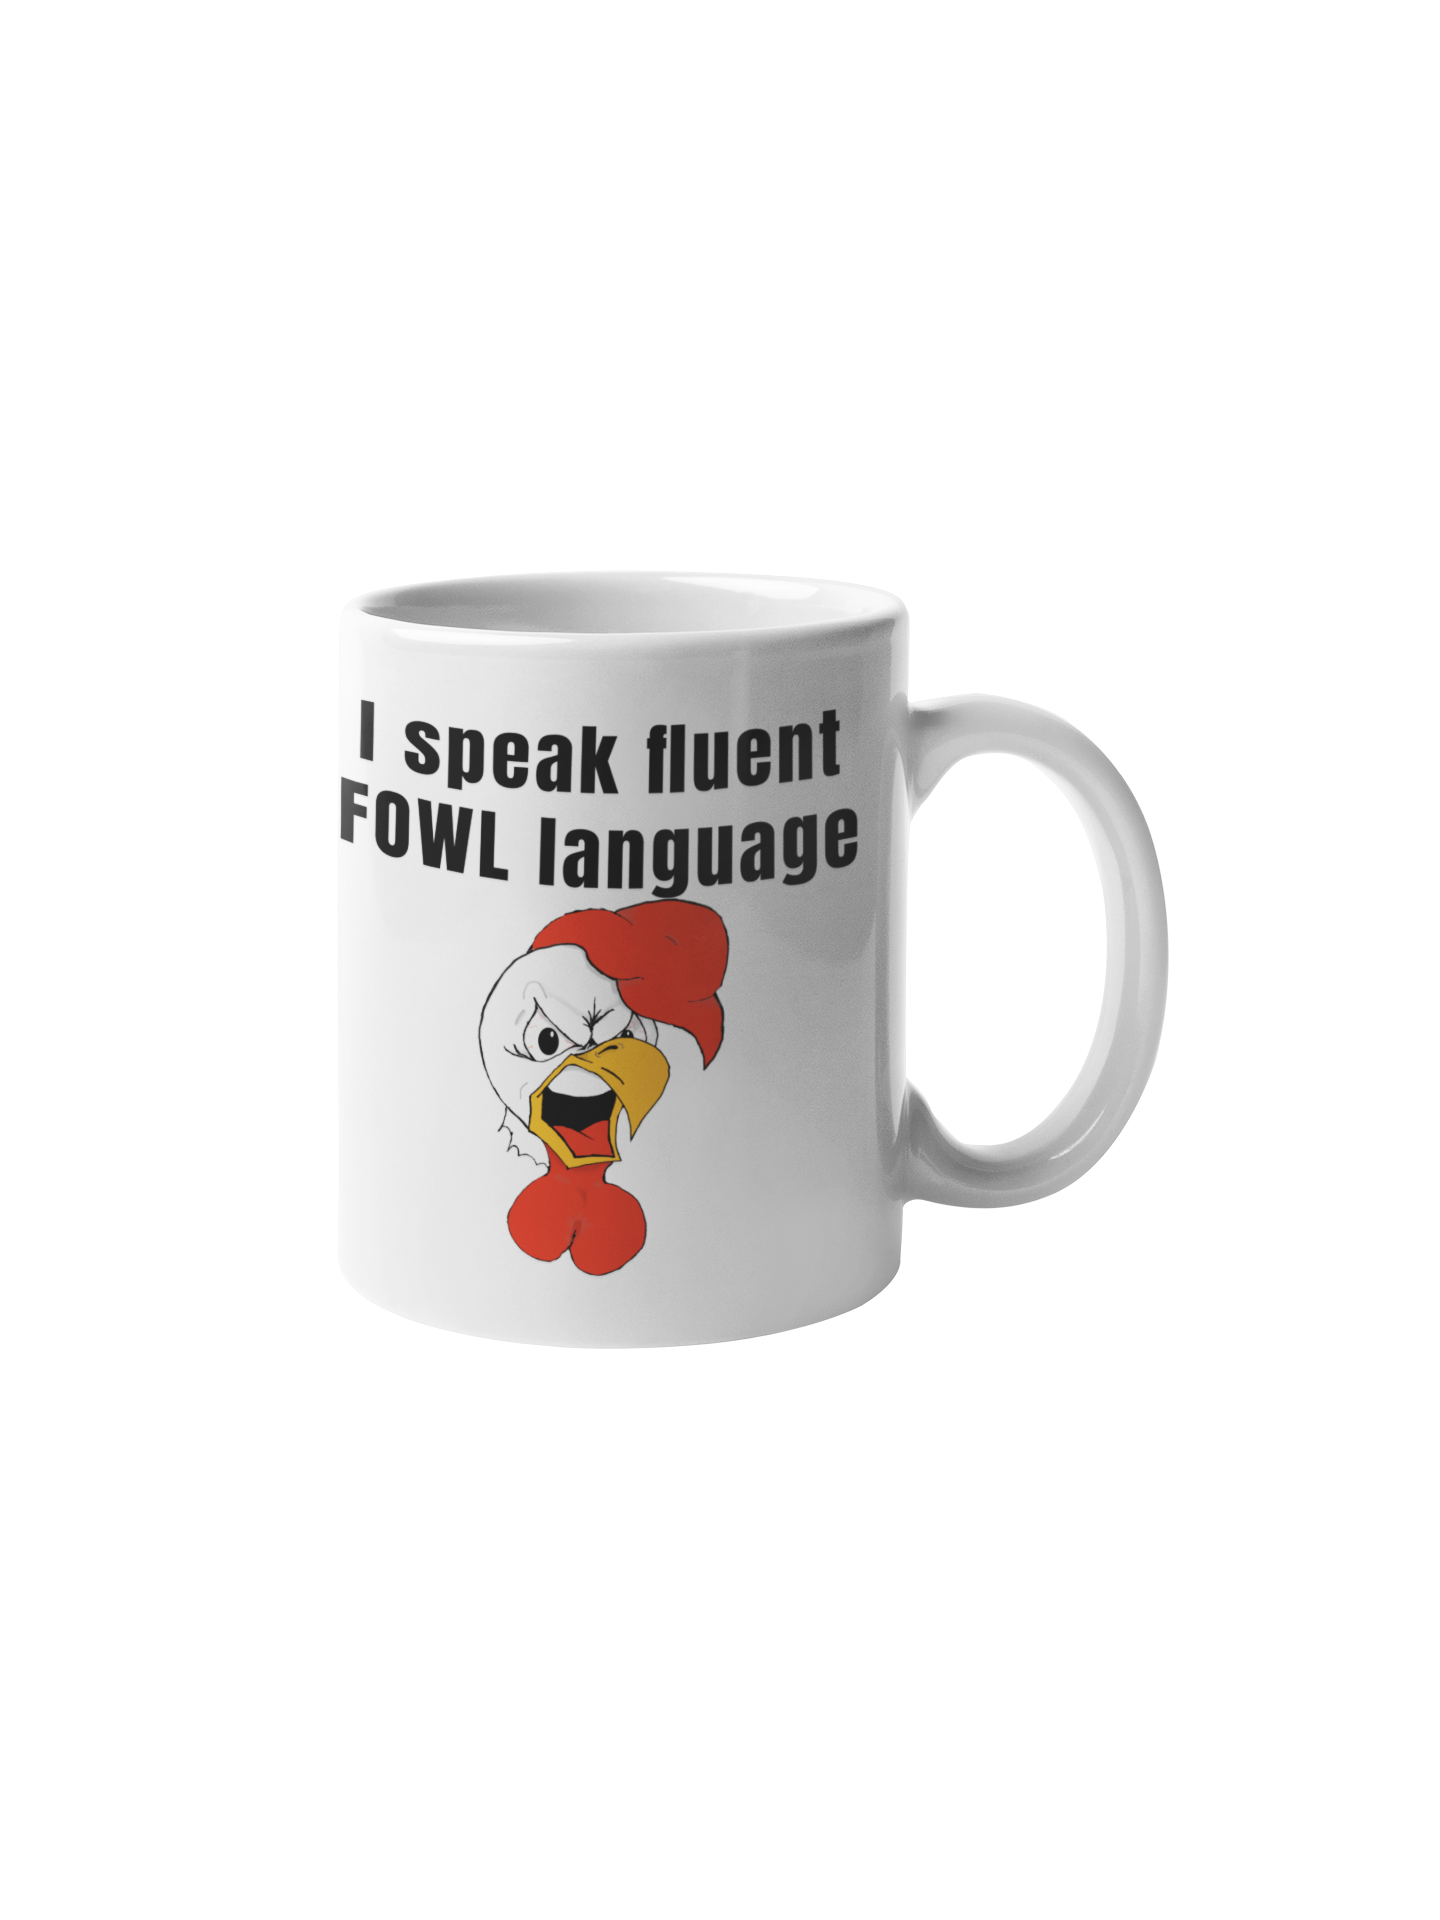 I speak fluent FOWL language - white glossy mug